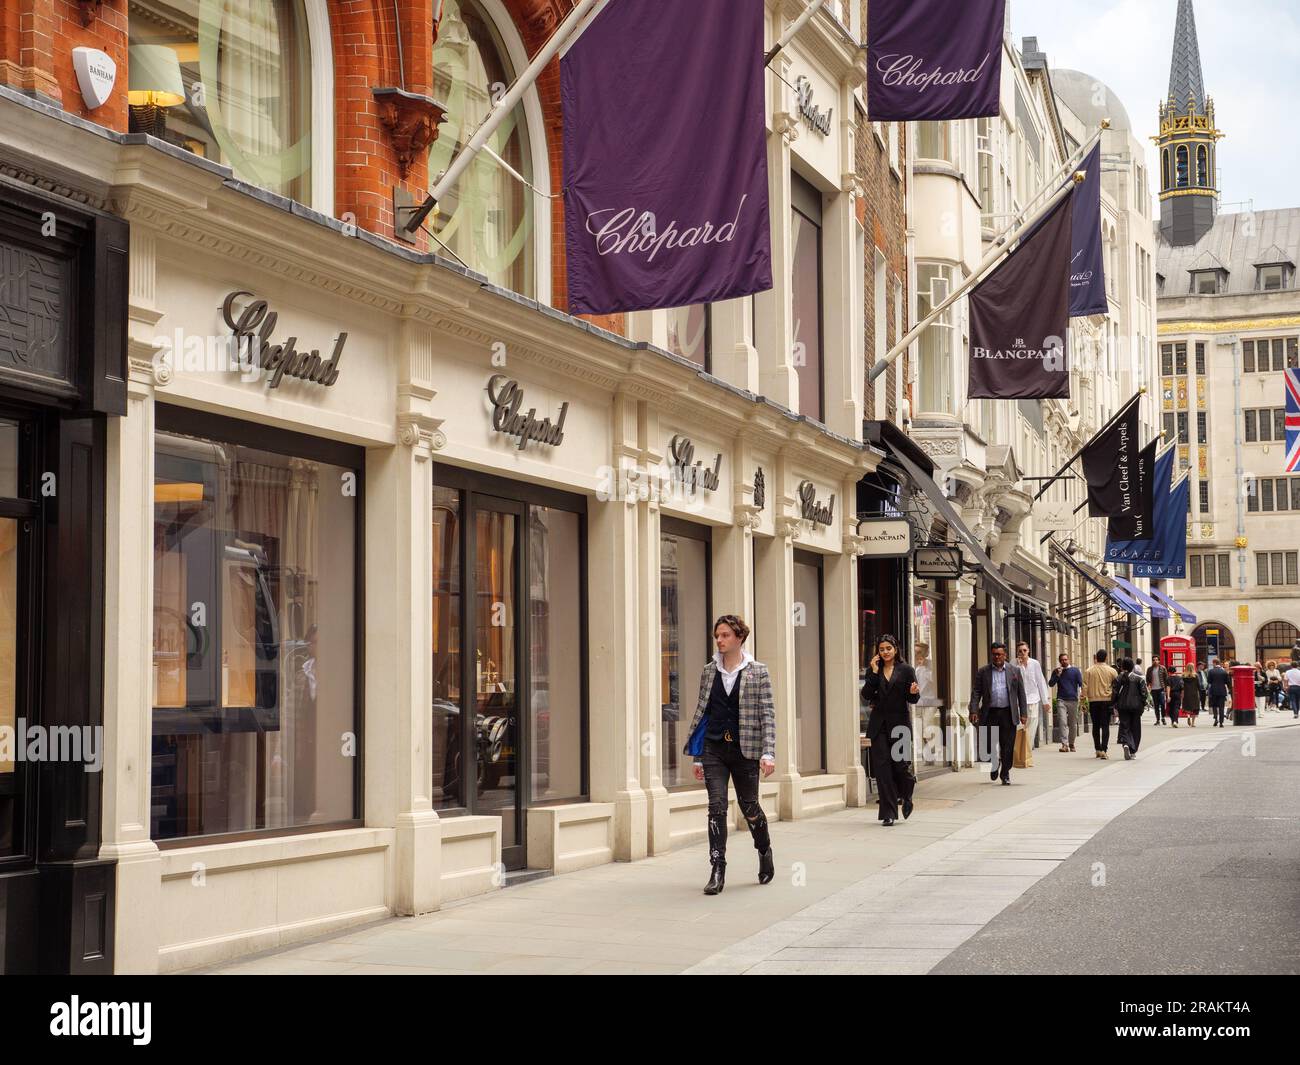 Fashionable people walking past Chopard in Bond Street, London, UK Stock Photo